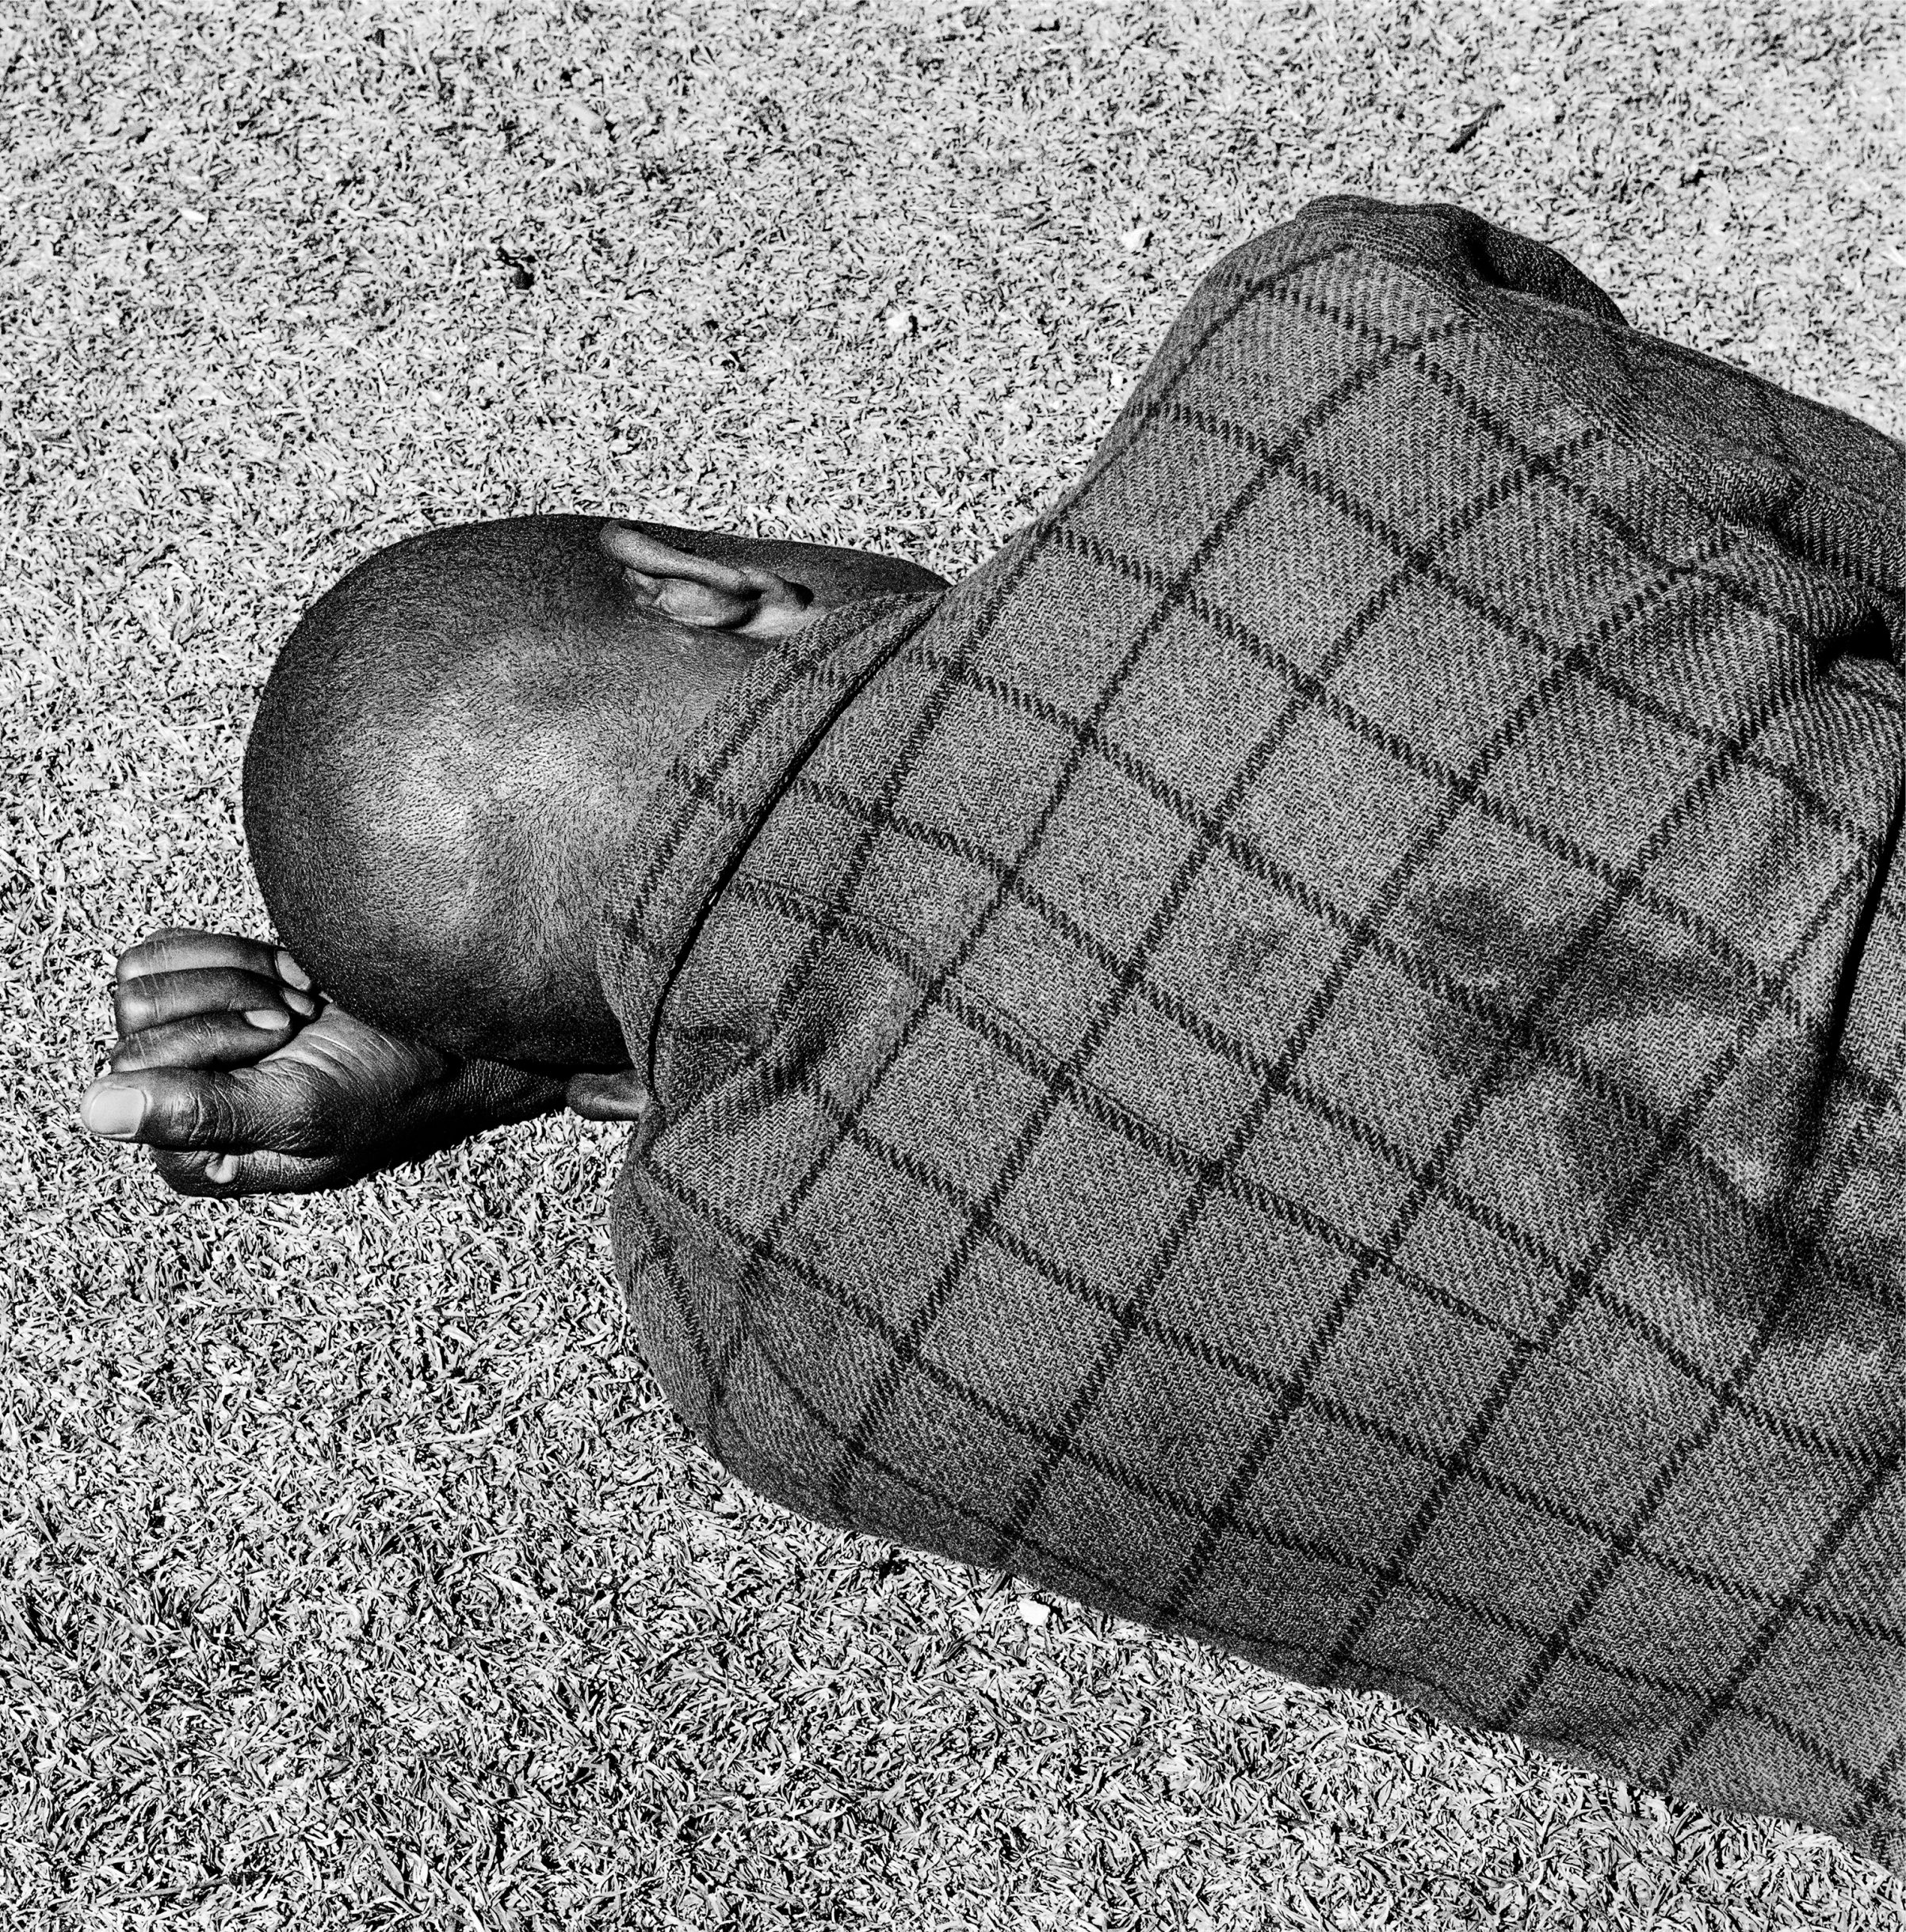 Sleeping man, Joubert Park, Johannesburg. 1975 (David Goldblatt—Courtesy of the Goodman Gallery)